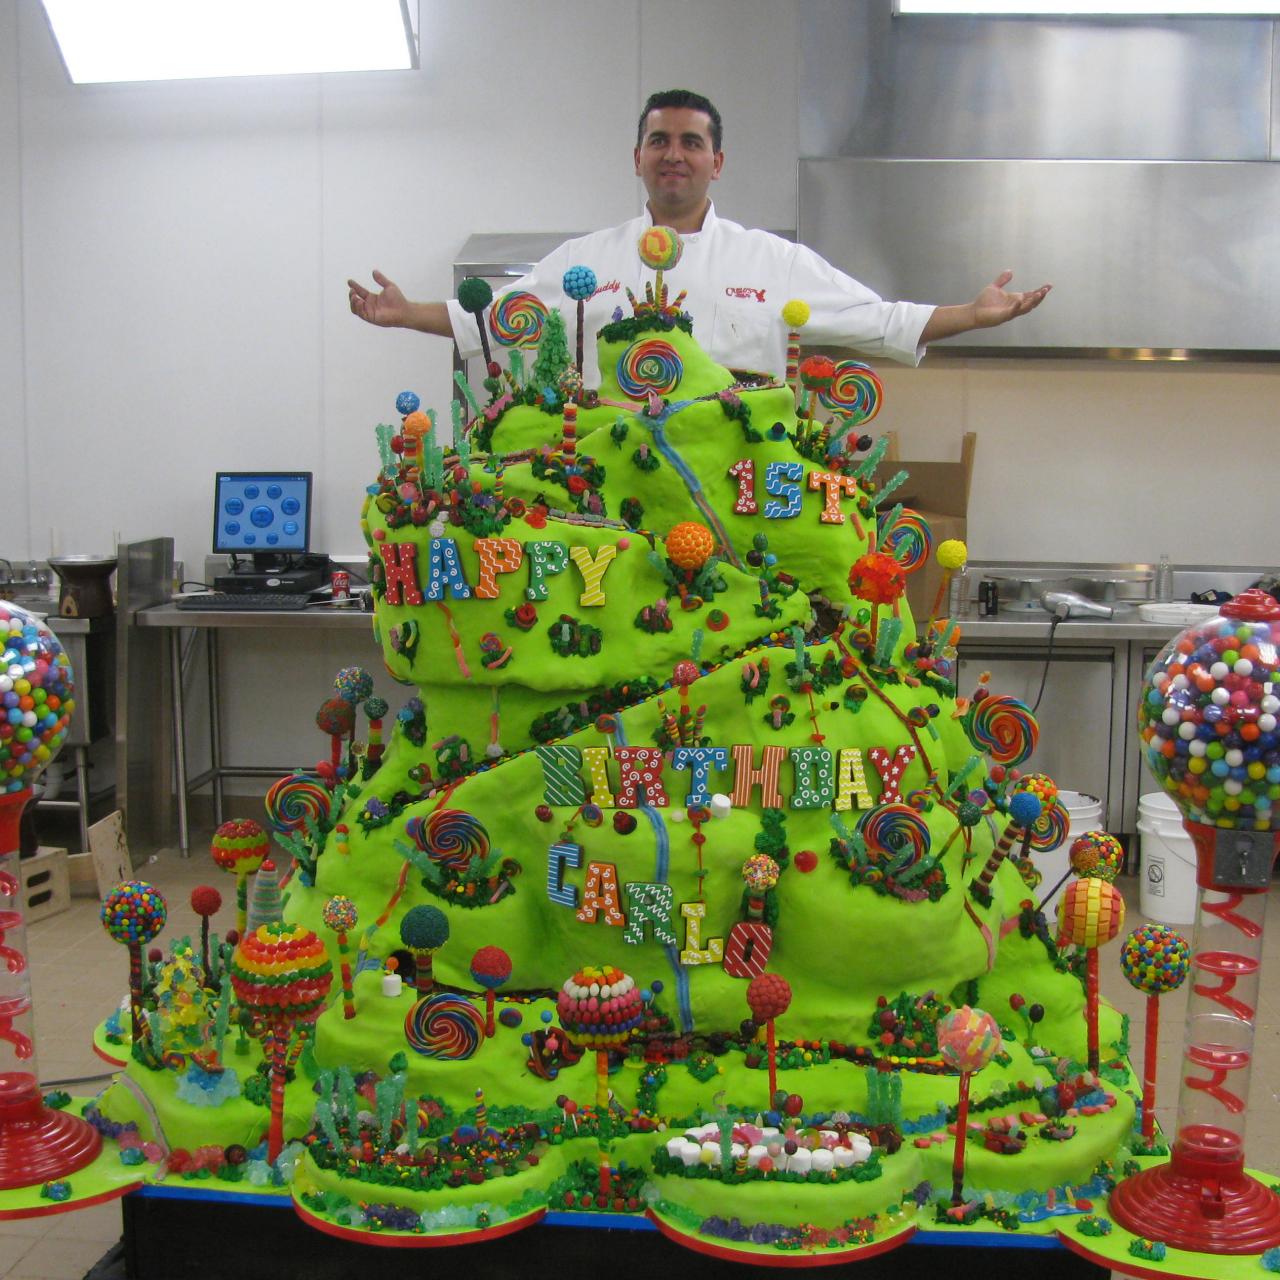 Buddy Valastro's Children: Meet the 'Cake Boss' Star's Kids